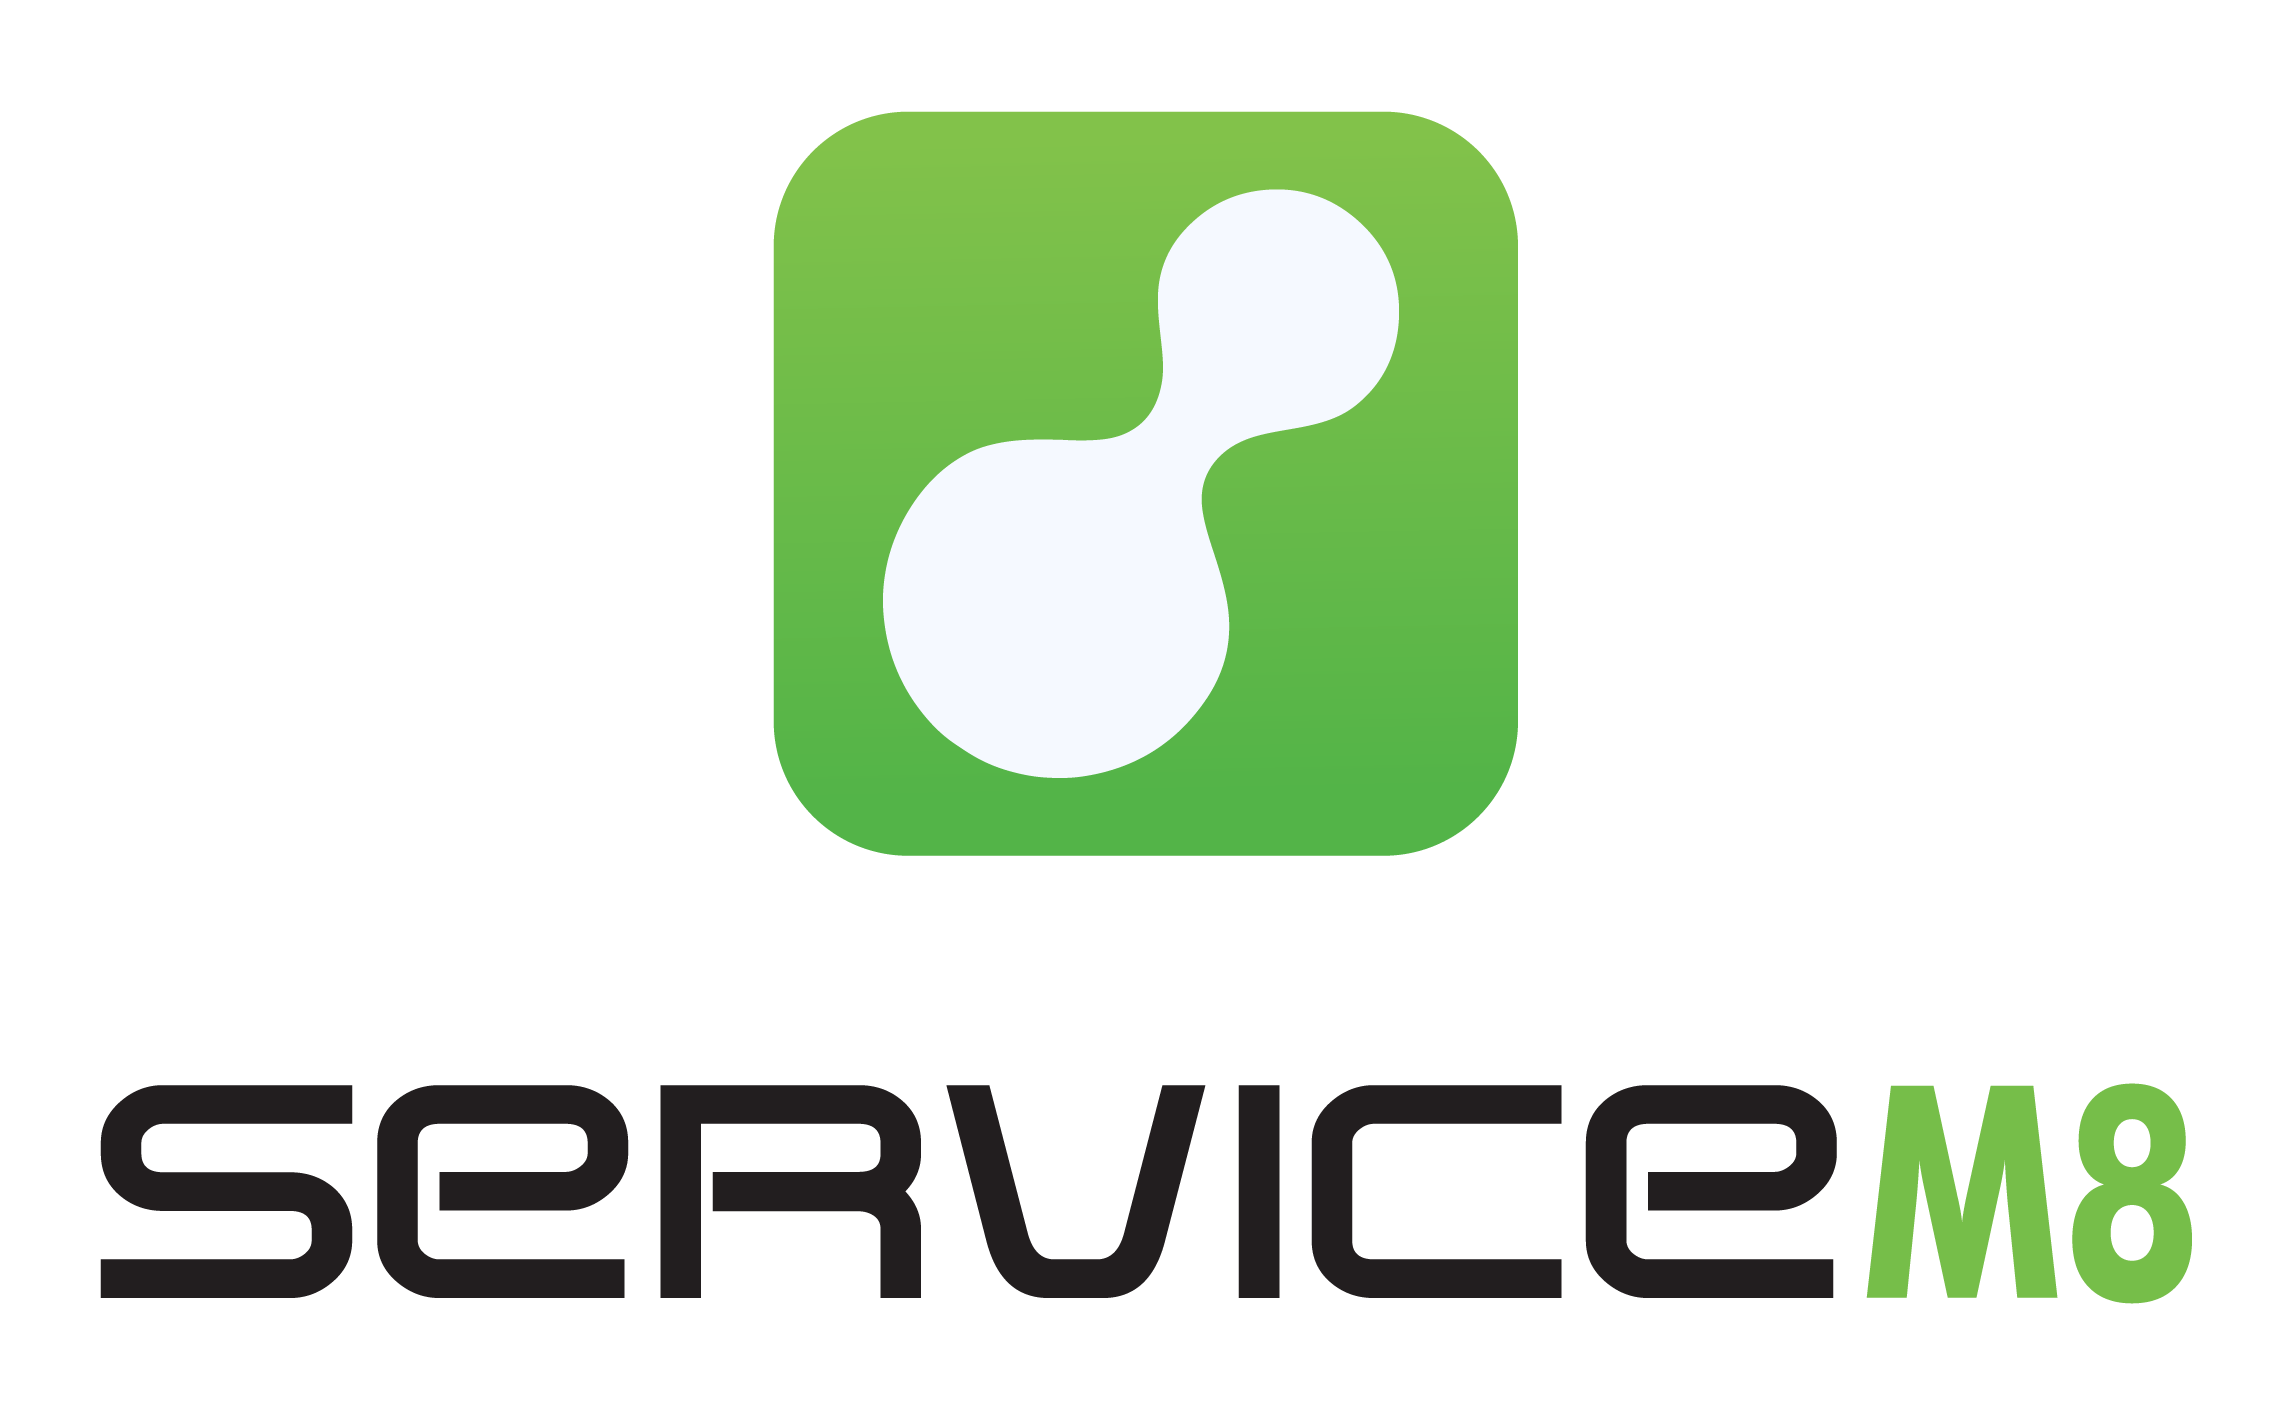 Service M8 logo